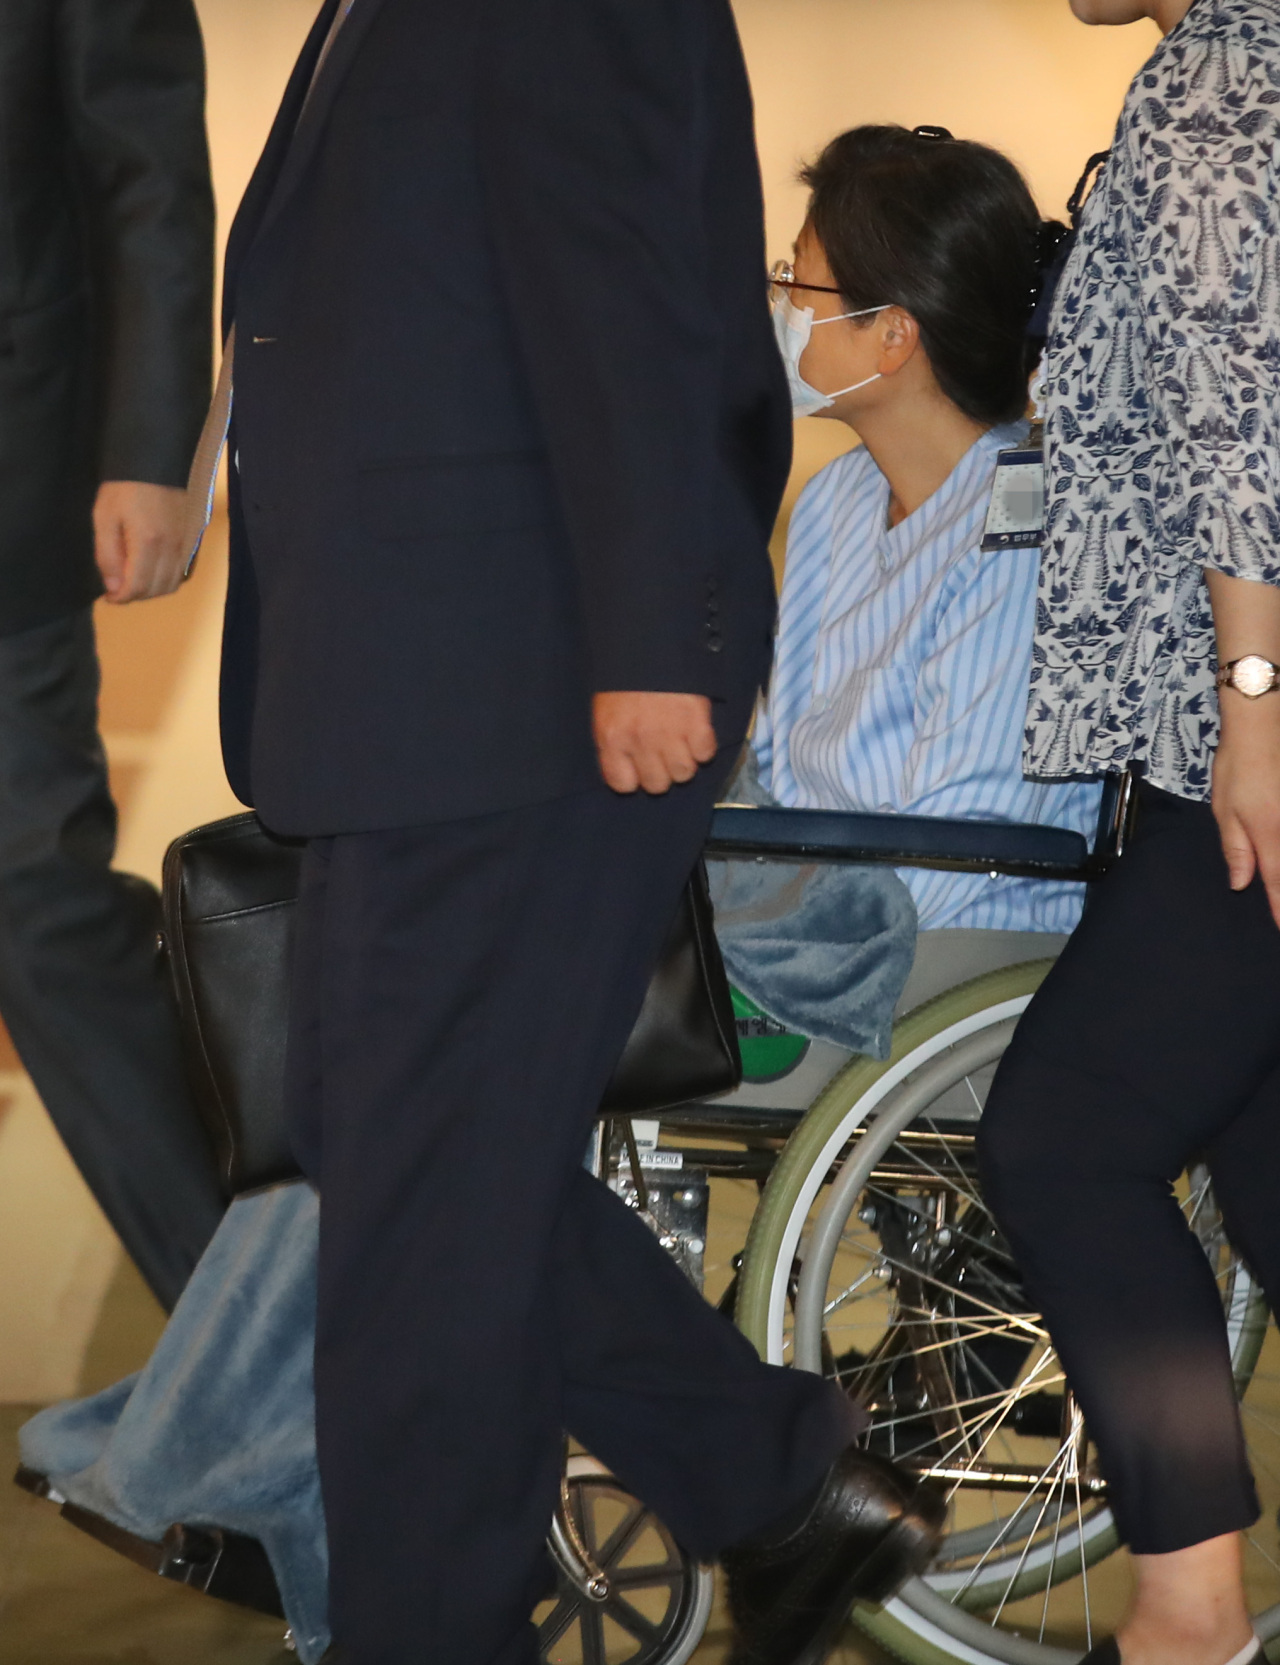 Former President Park Geun-hye (Yonhap)